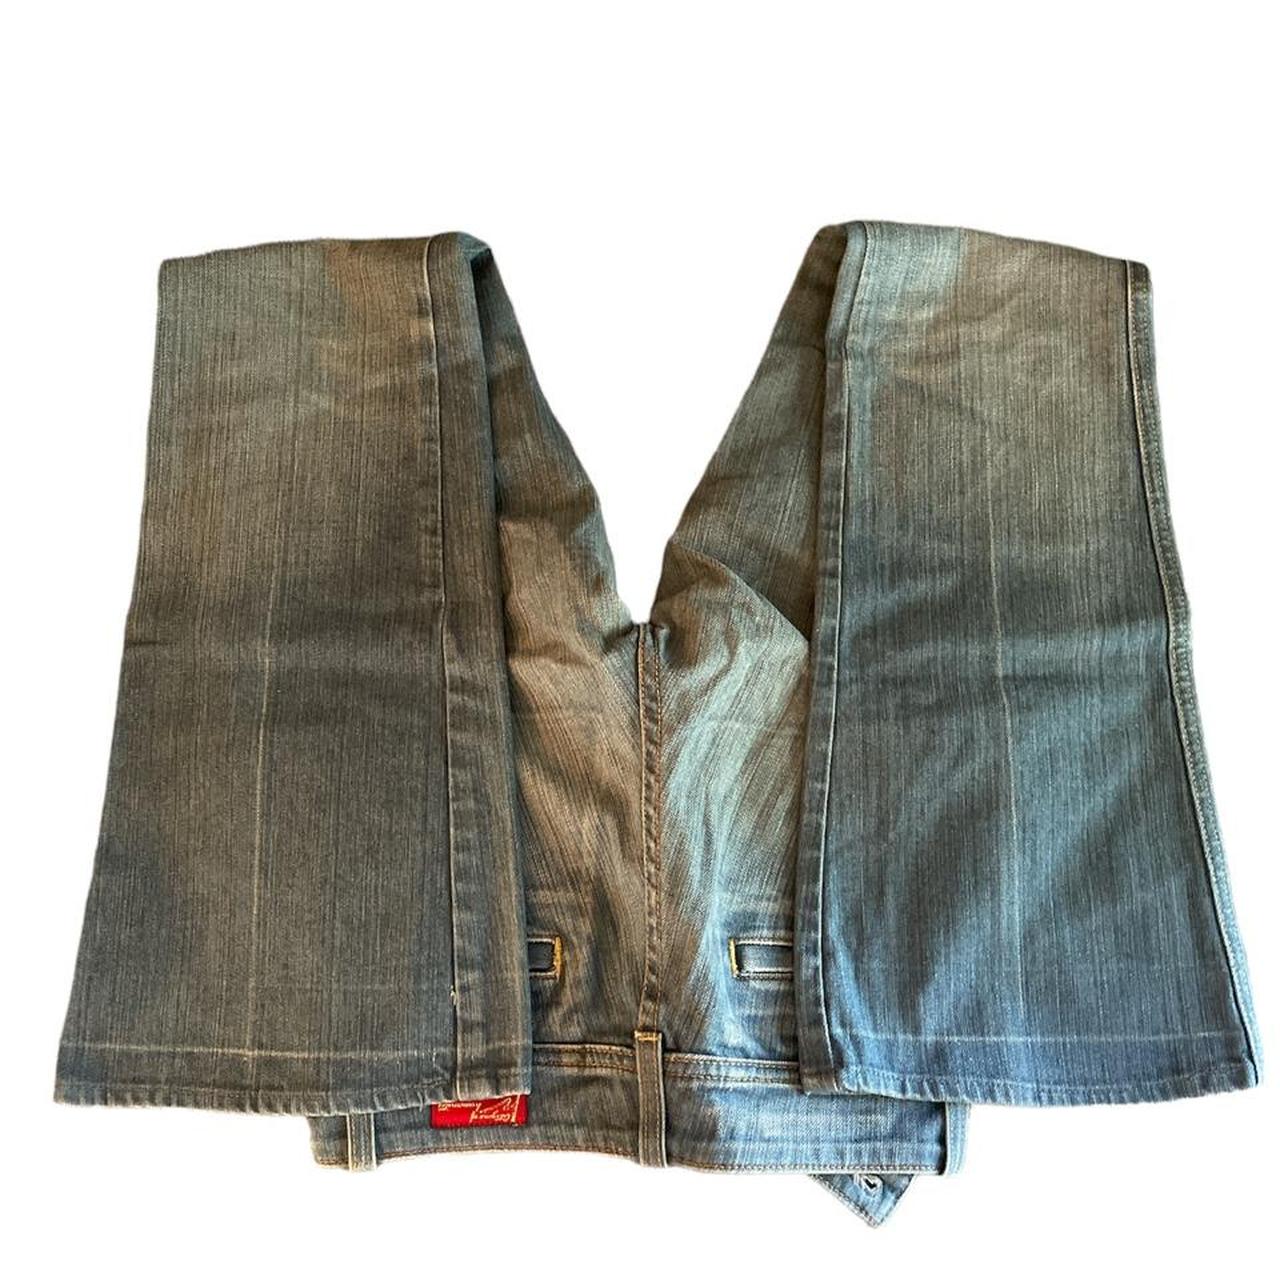 Product Image 2 - Darker light blue jeans, size